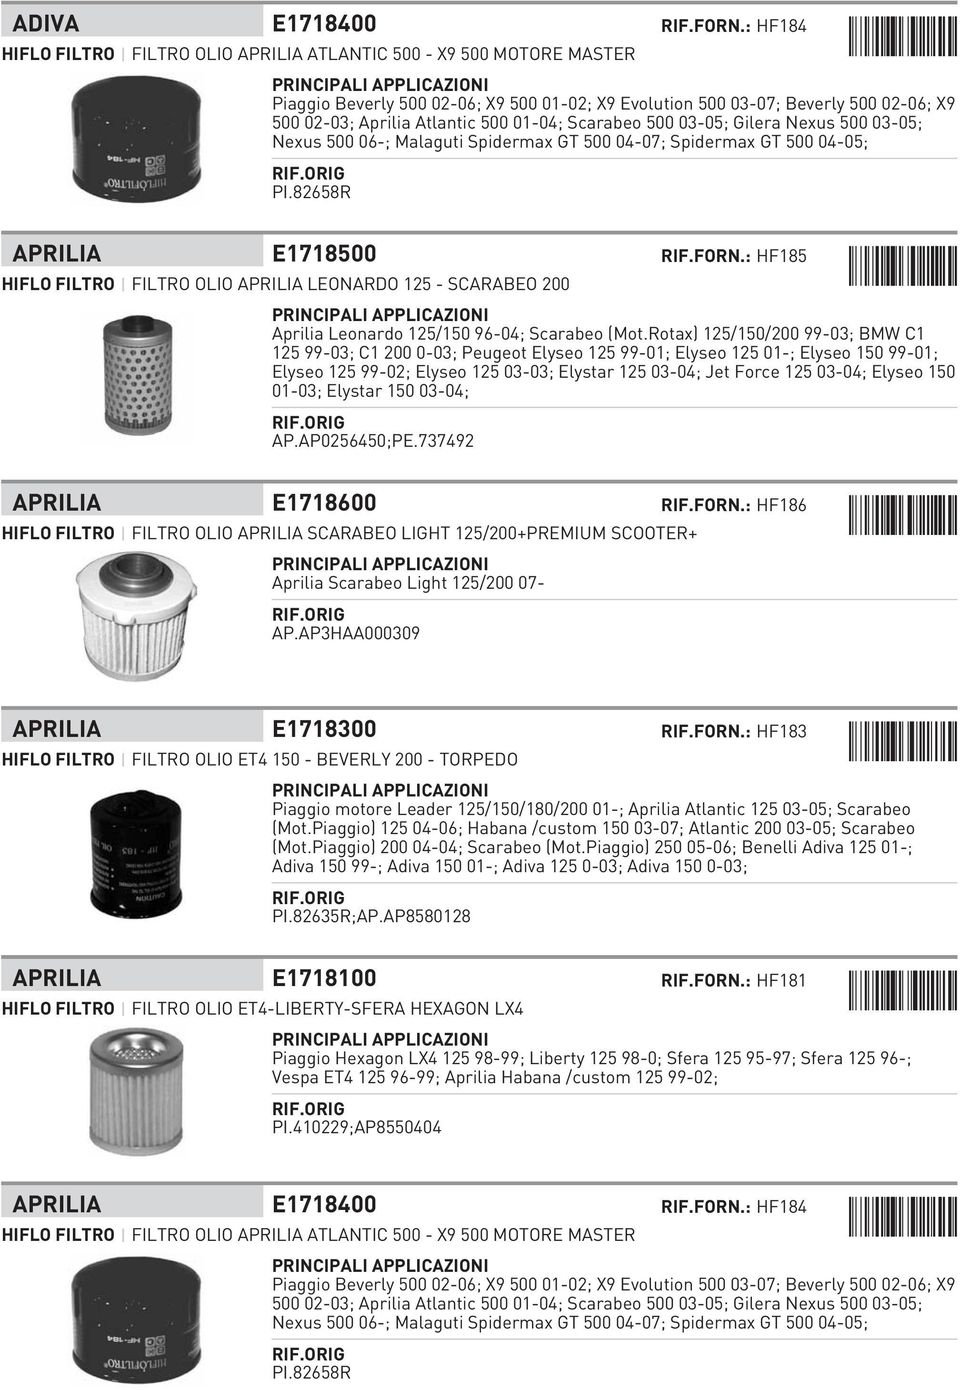 01-04; Scarabeo 500 03-05; Gilera Nexus 500 03-05; Nexus 500 06-; Malaguti Spidermax GT 500 04-07; Spidermax GT 500 04-05; PI.82658R APRILIA E1718500 RIF.FORN.